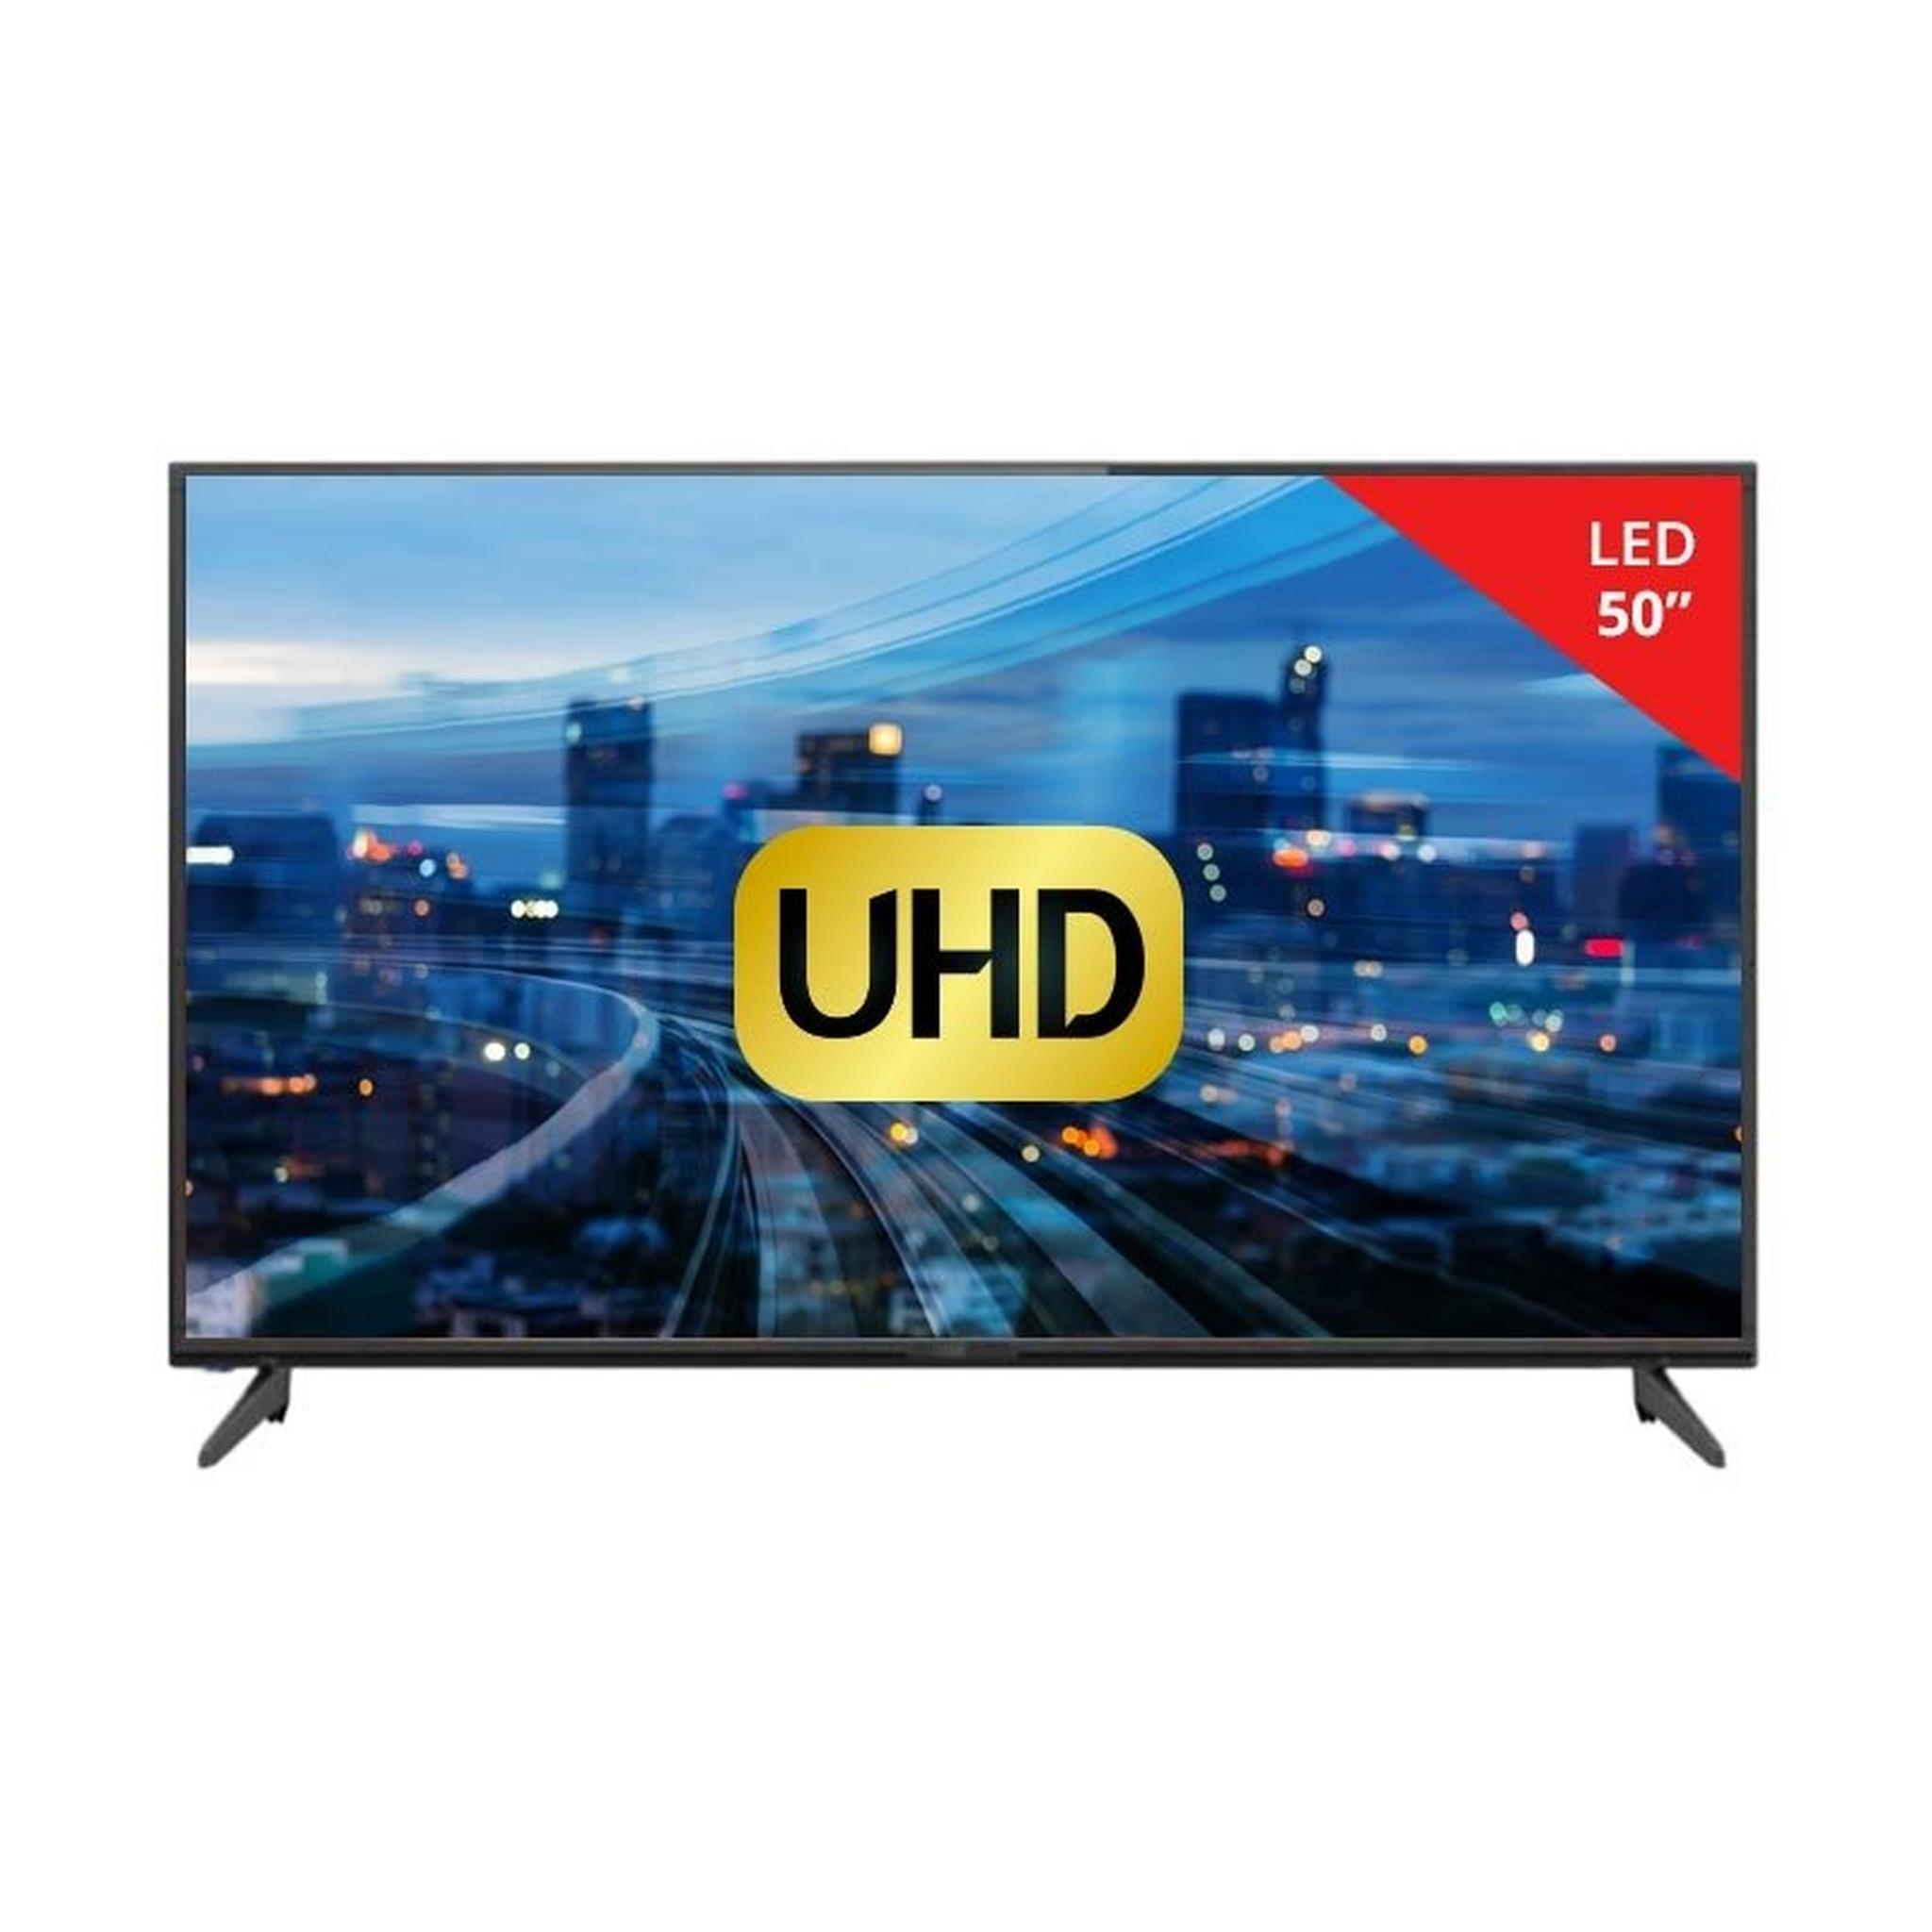 Wansa 50-inch Ultra HD Smart LED TV - WUD50G7762SN2